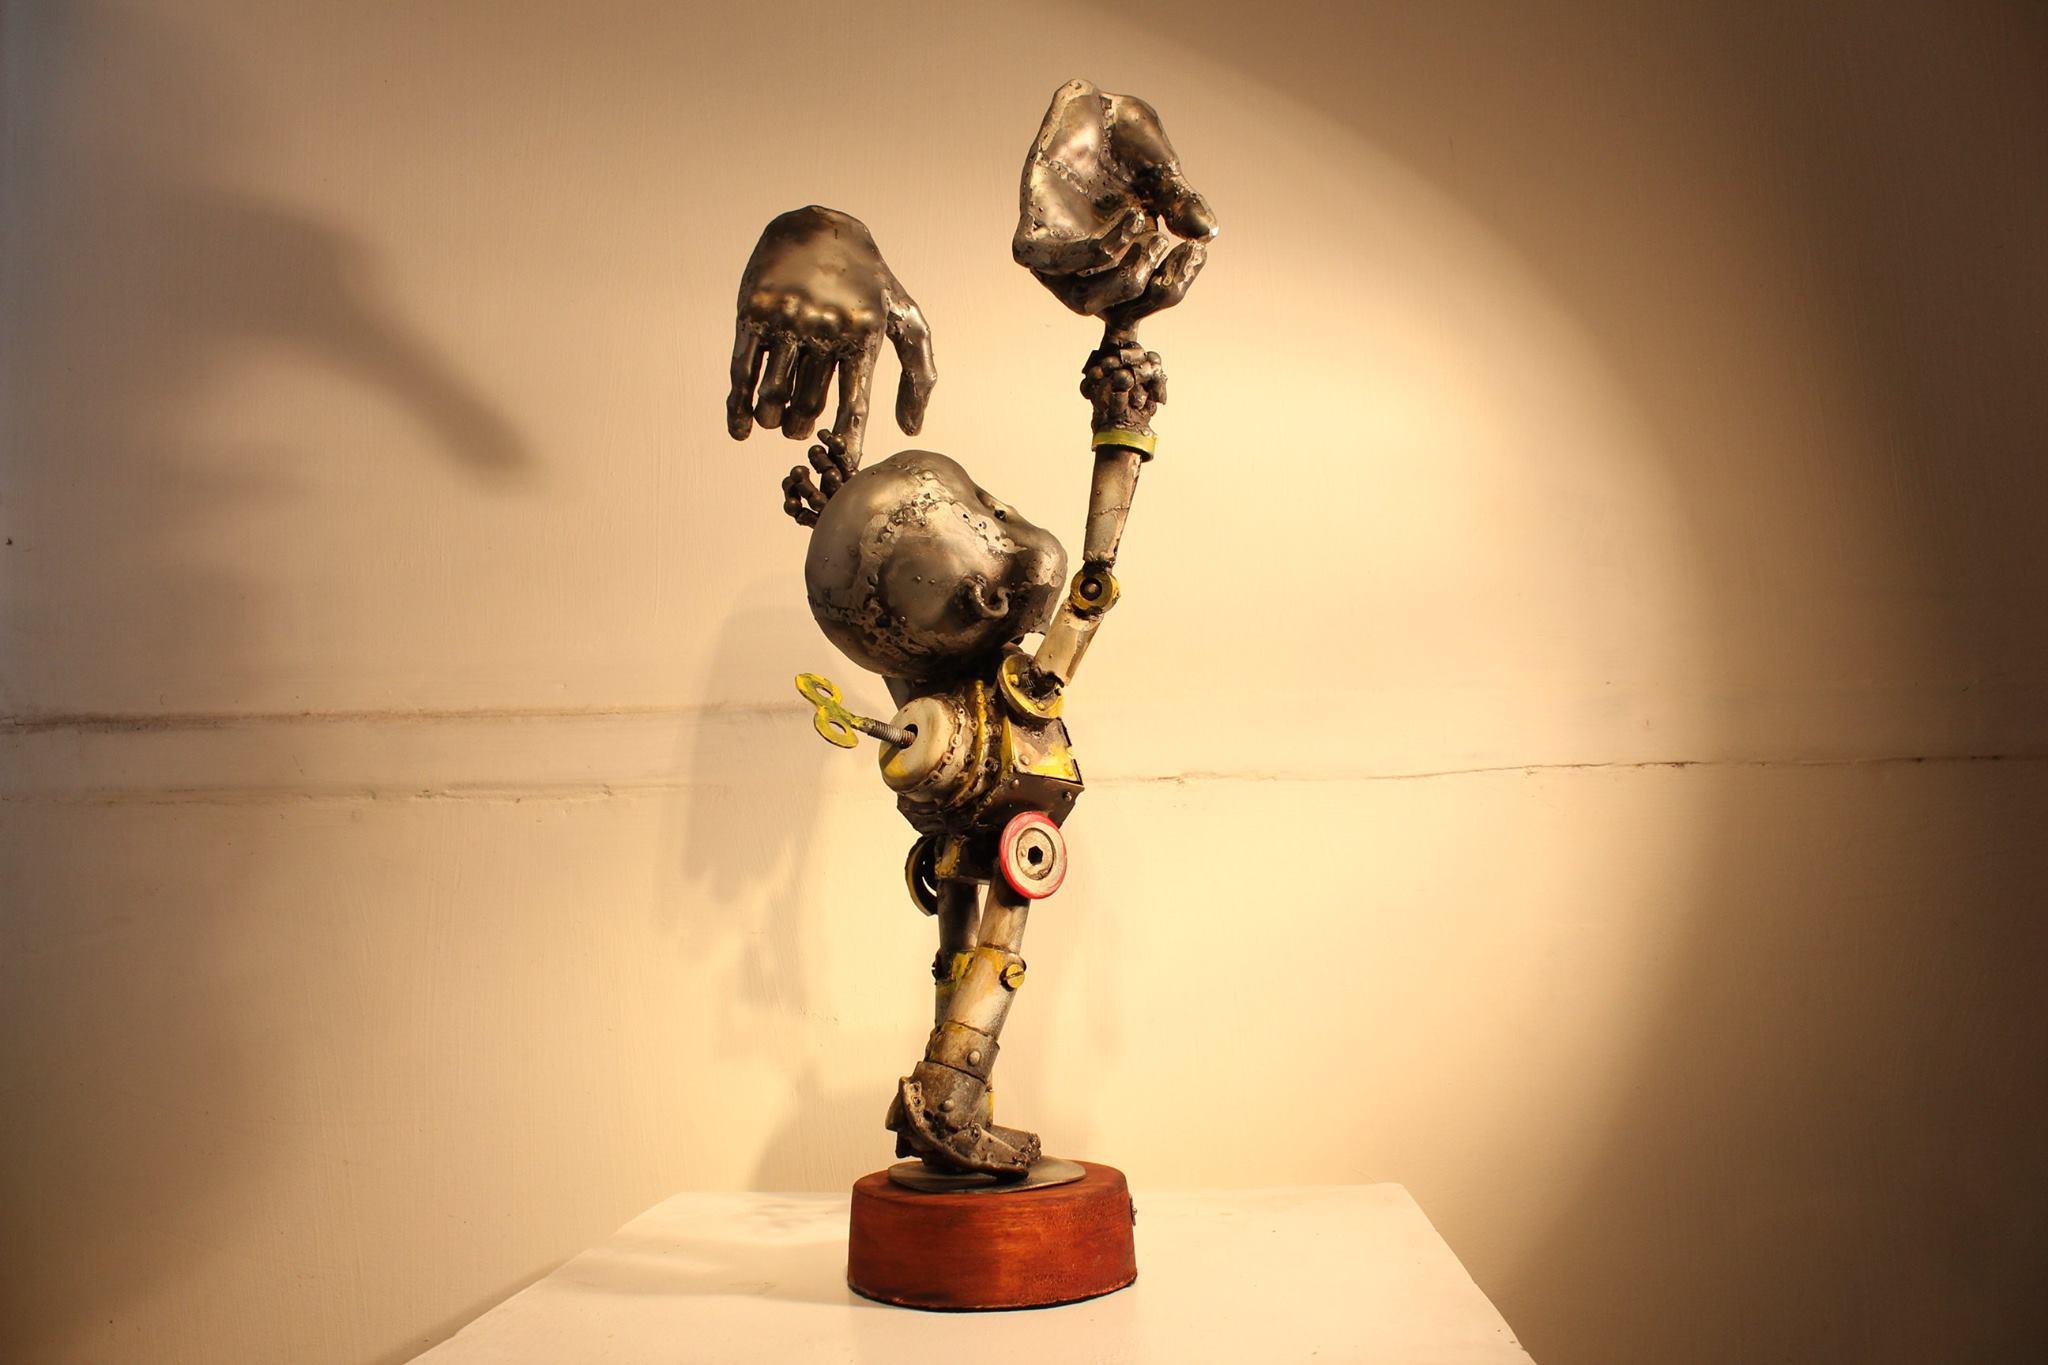 Guillermo Rigattieri Steampunk sculpture Primeros días